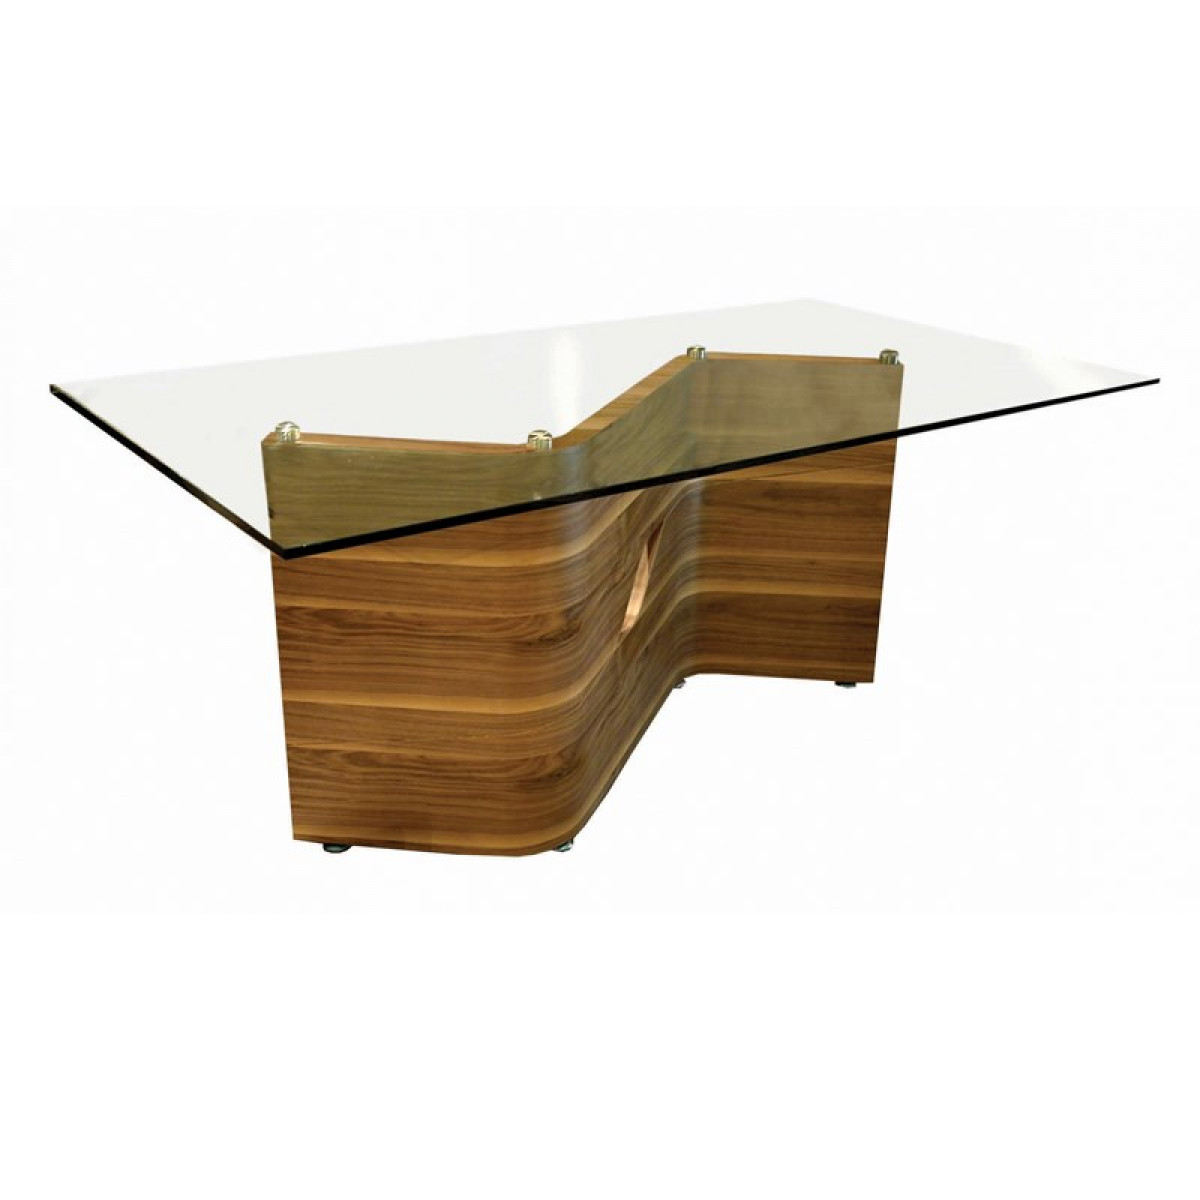 Shop Dakota 80" Dining Table from DiMare Design on Openhaus